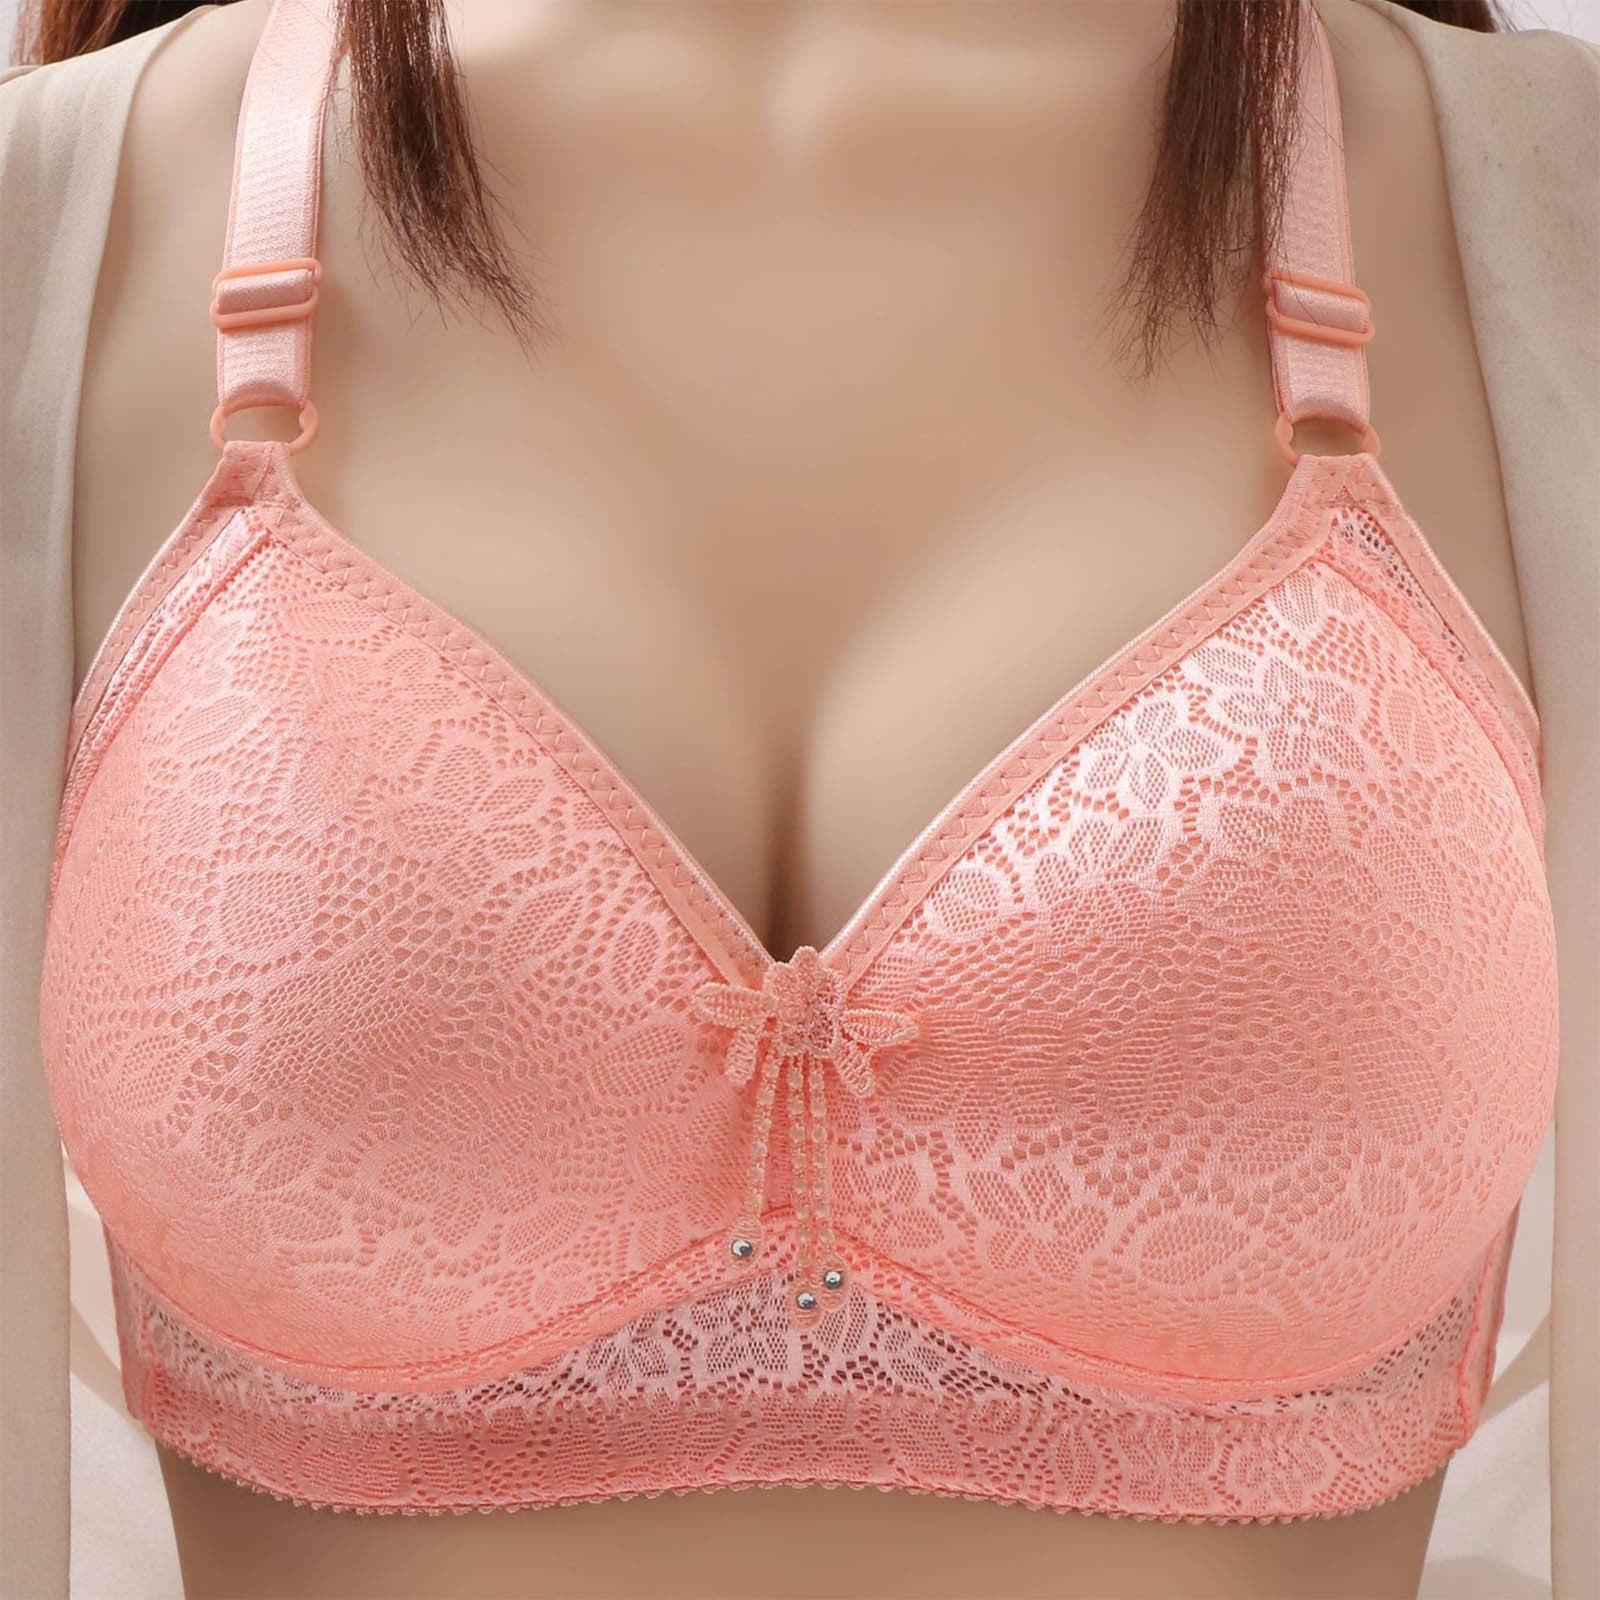 DTBPRQ Seamless Nursing Bra Woman's Comfortable Lace Breathable Bra  Underwear No Rims Plus Size Bras Savings Clearance Bras for Women 